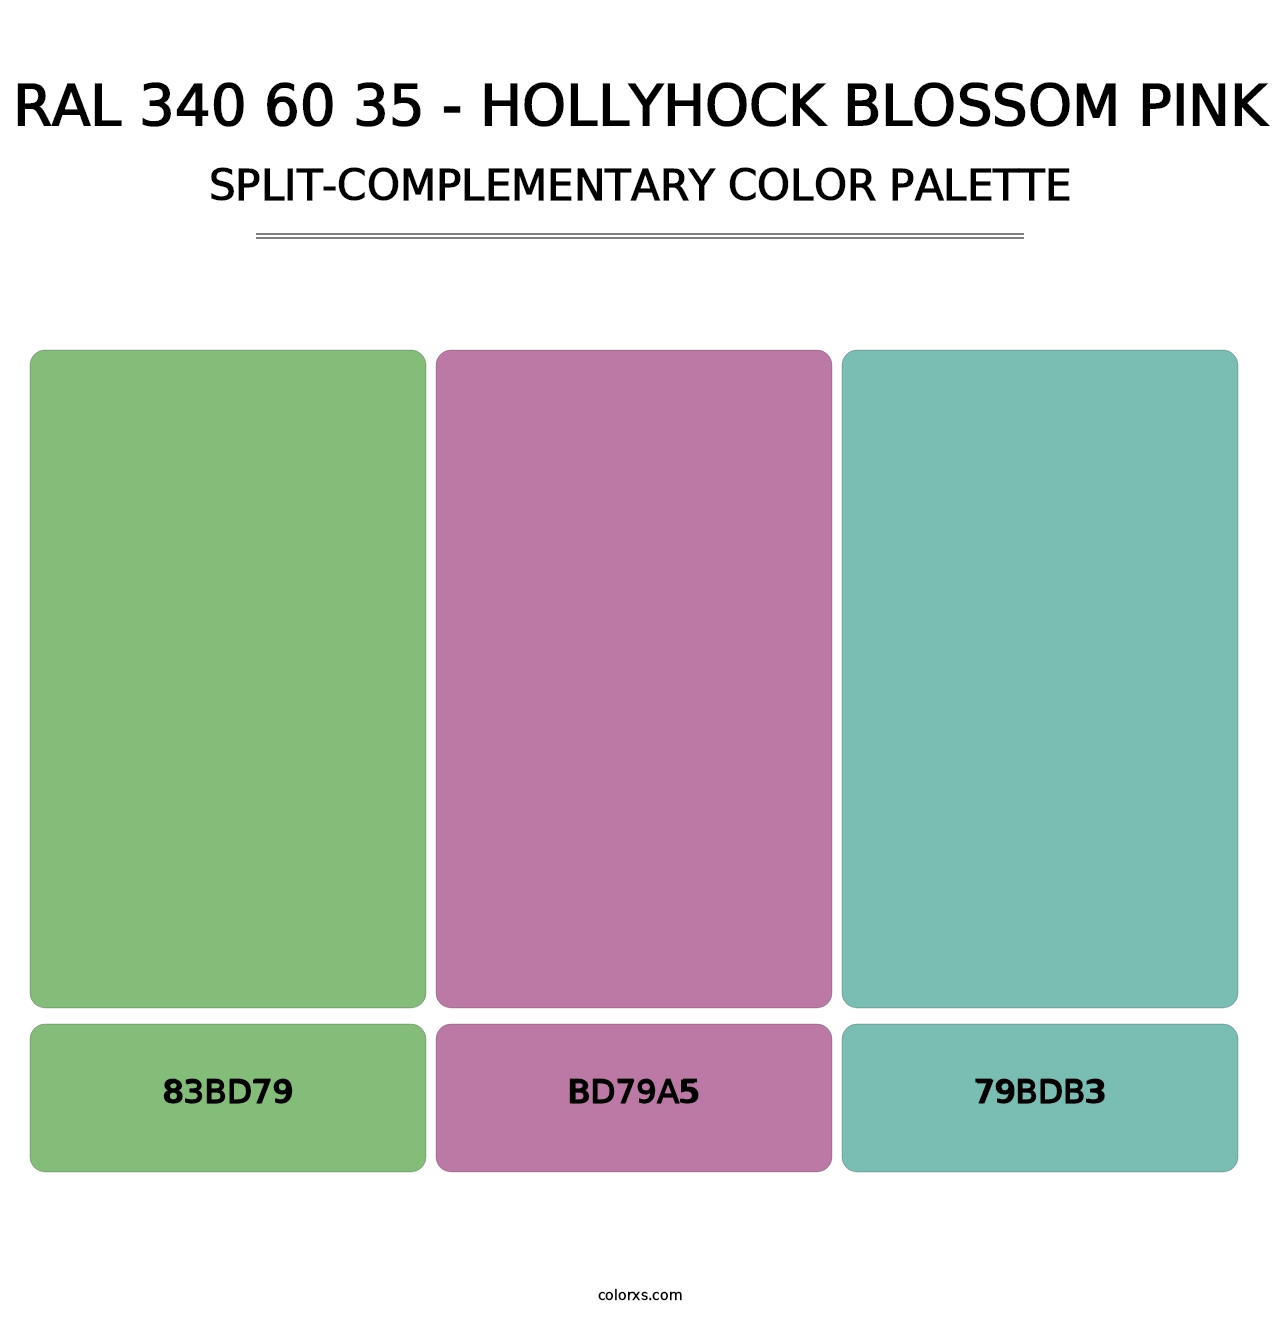 RAL 340 60 35 - Hollyhock Blossom Pink - Split-Complementary Color Palette